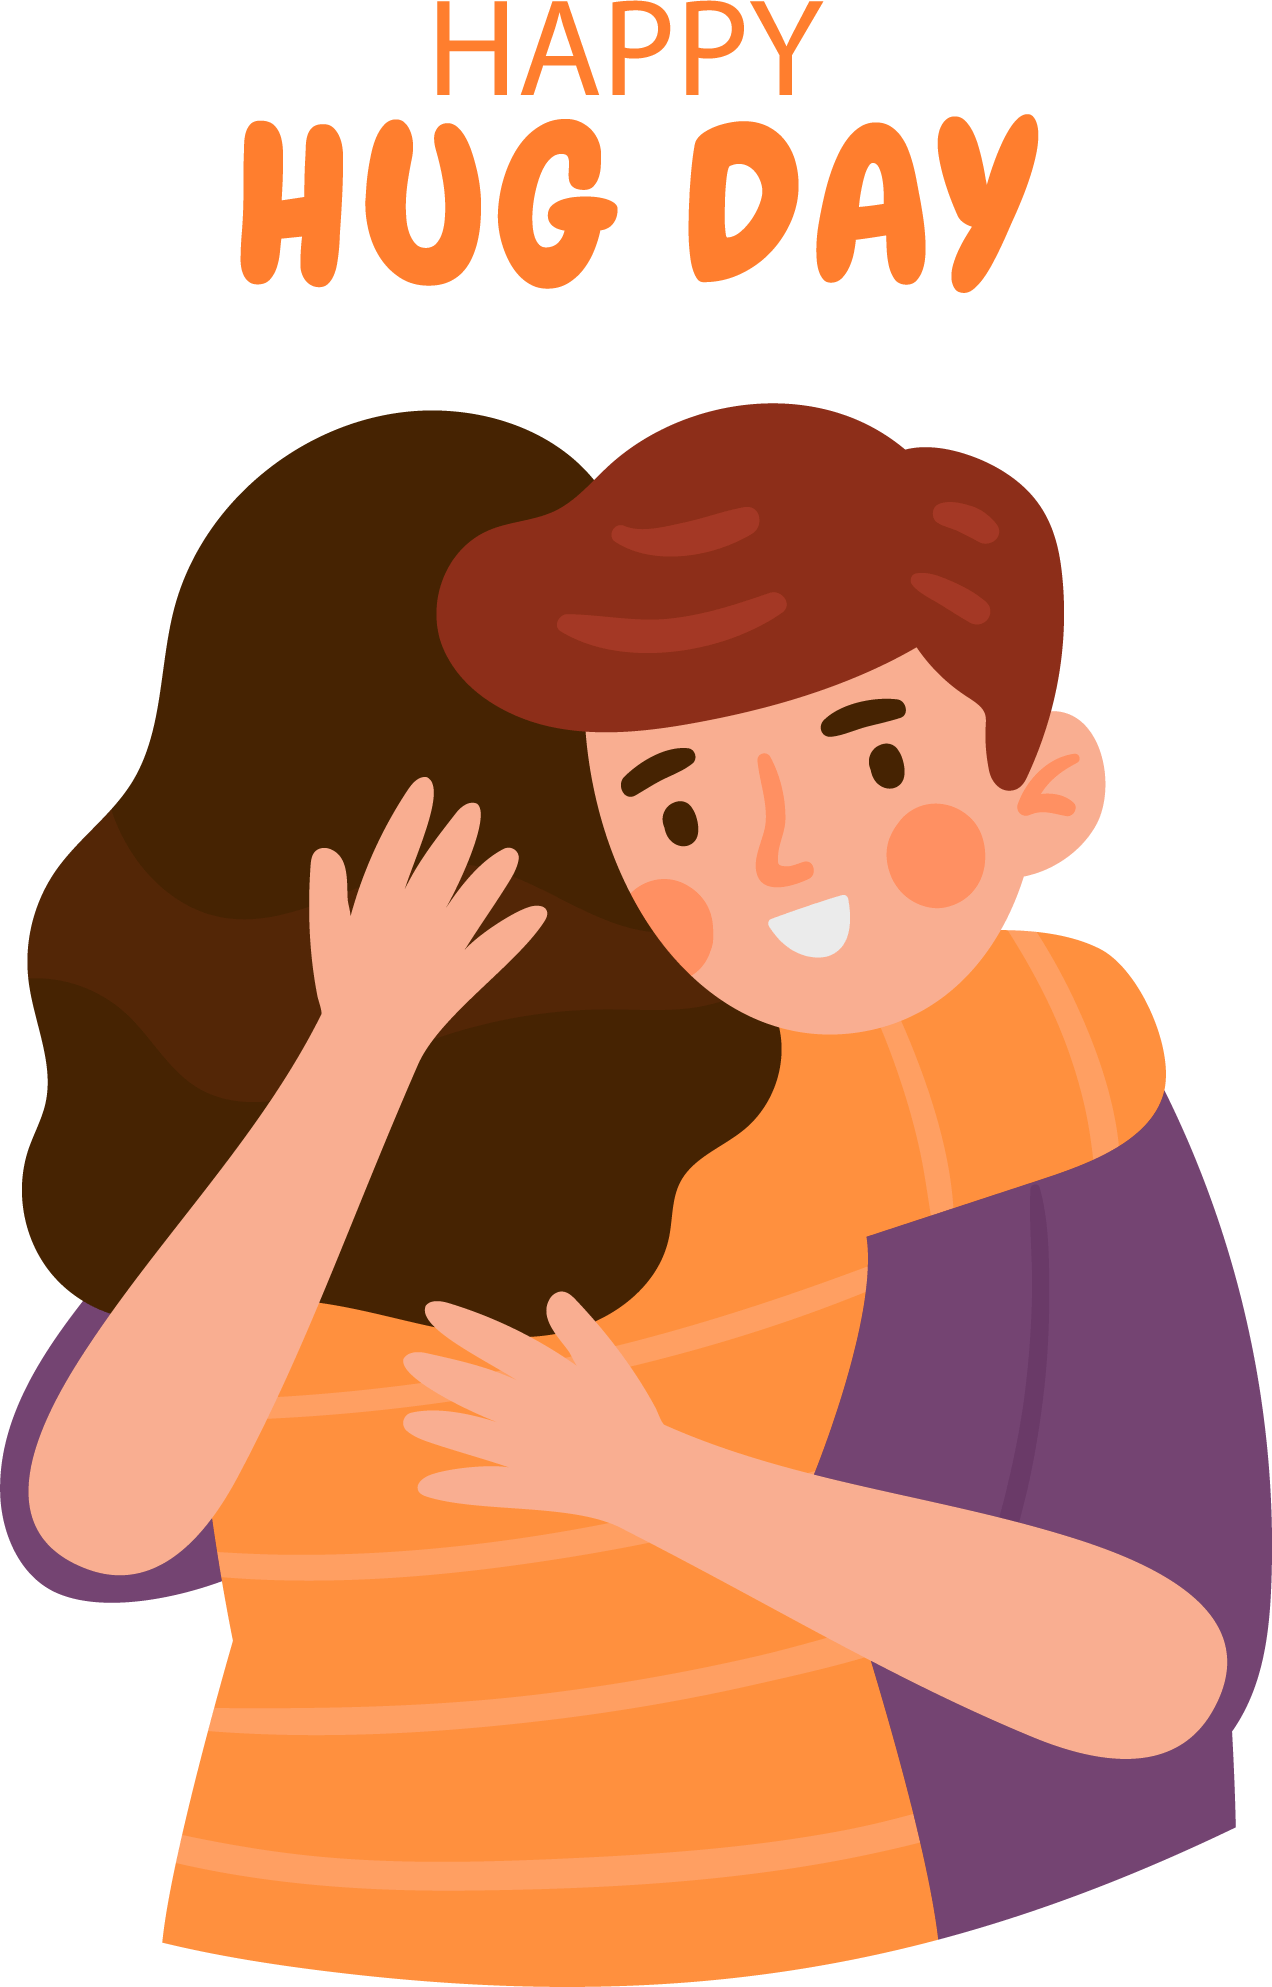 Couple hugging happy hug day png image - Pngfreepic